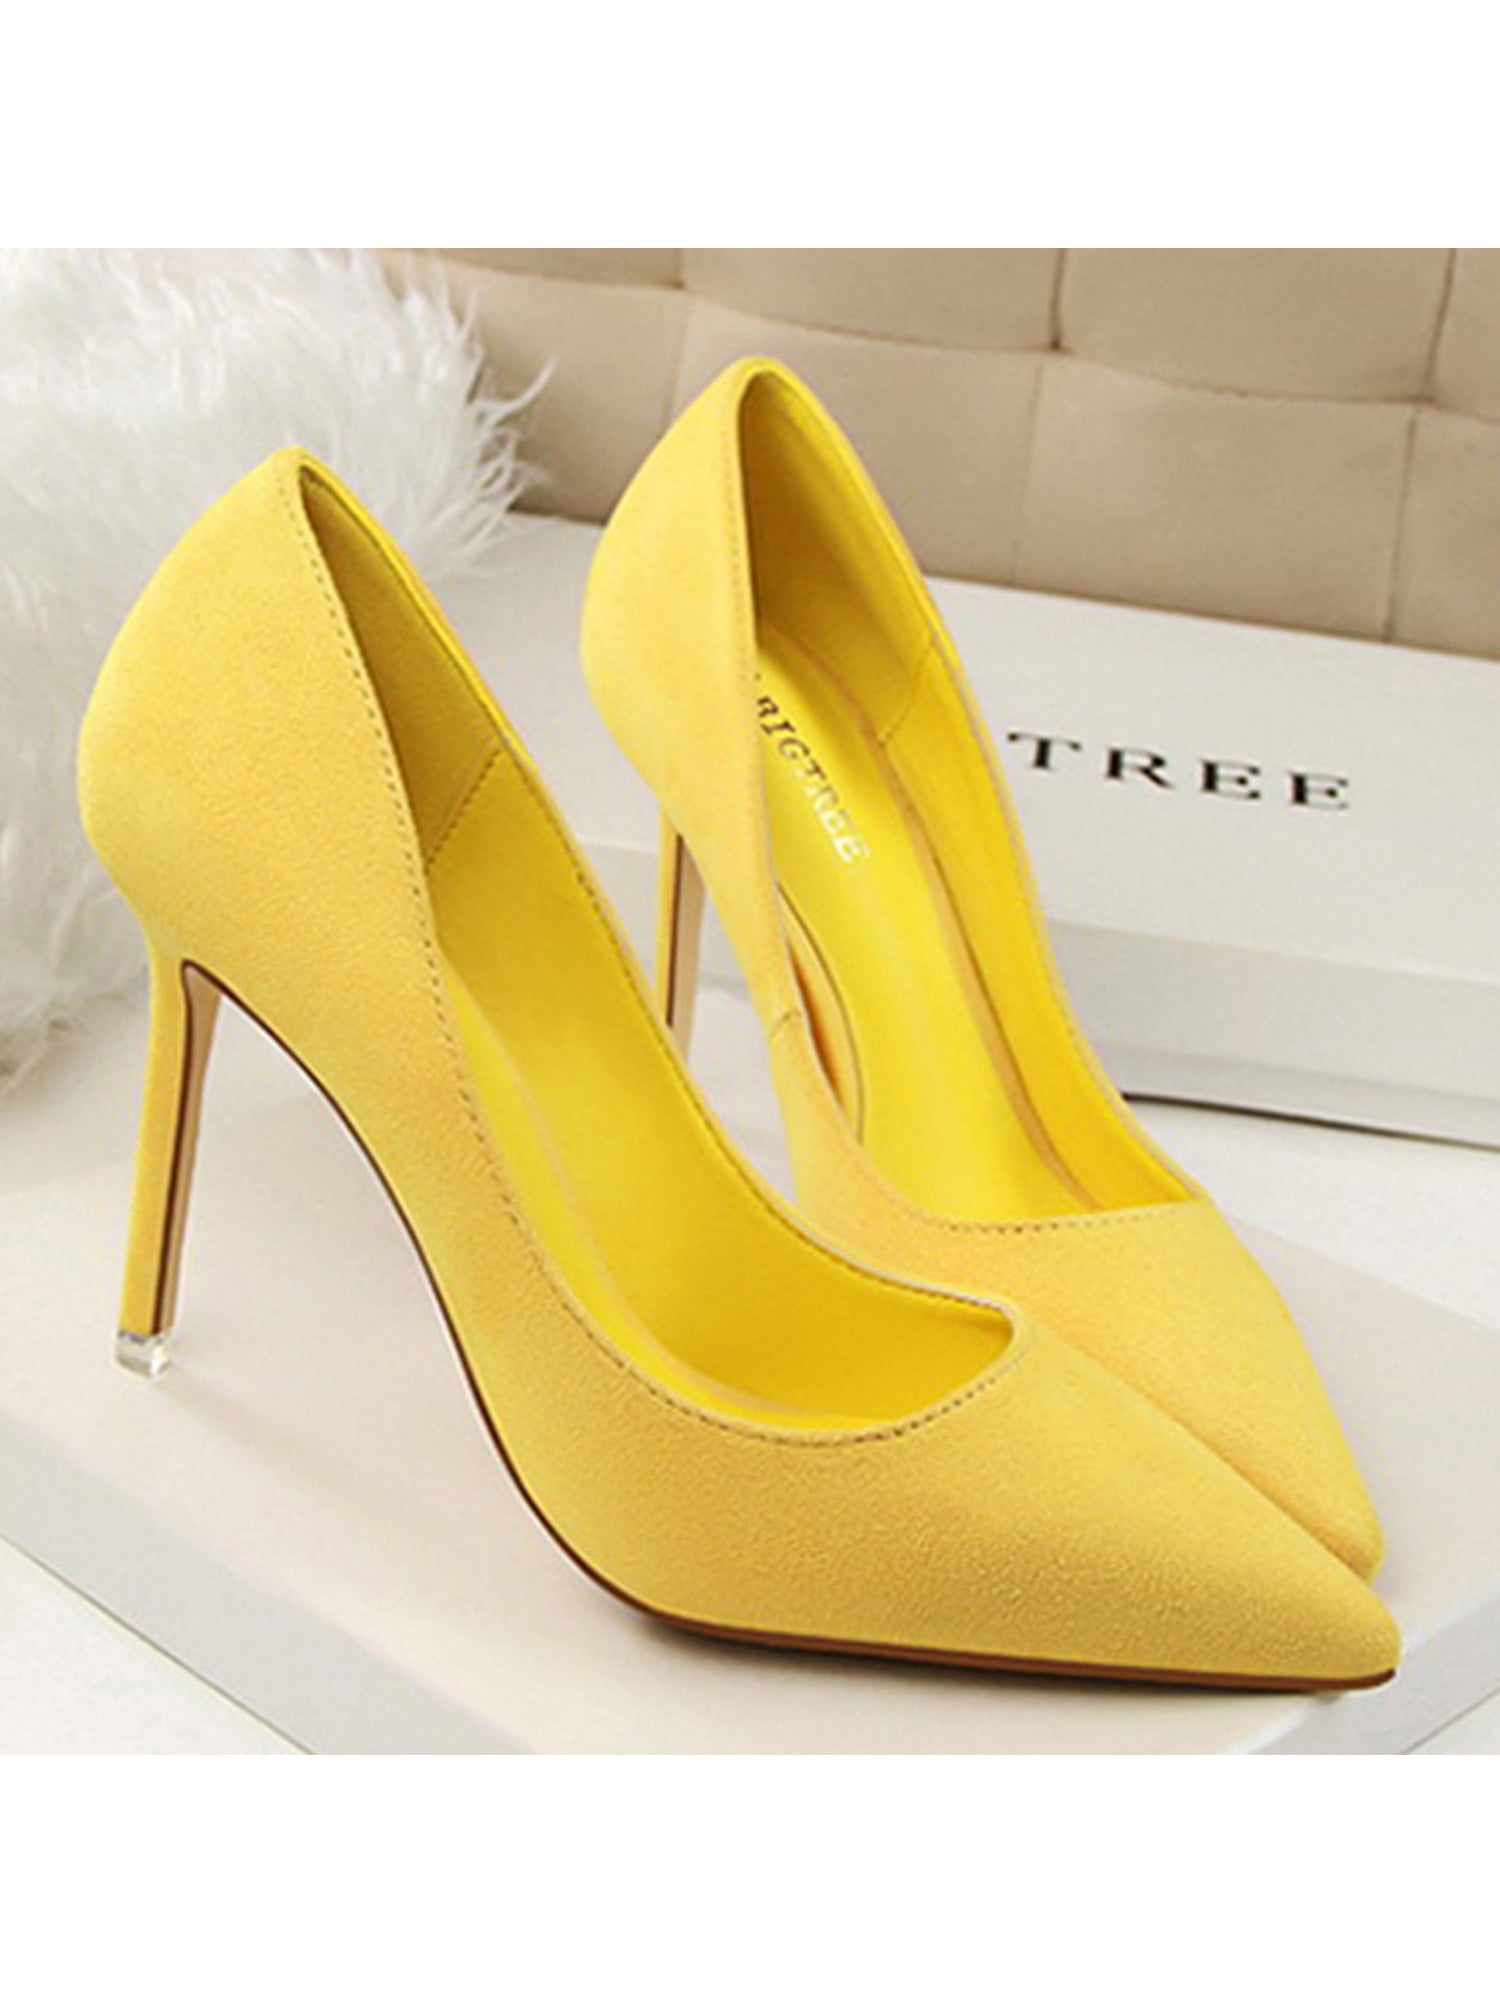 yellow green wedding shoes floral print Kate Spade bridal heels